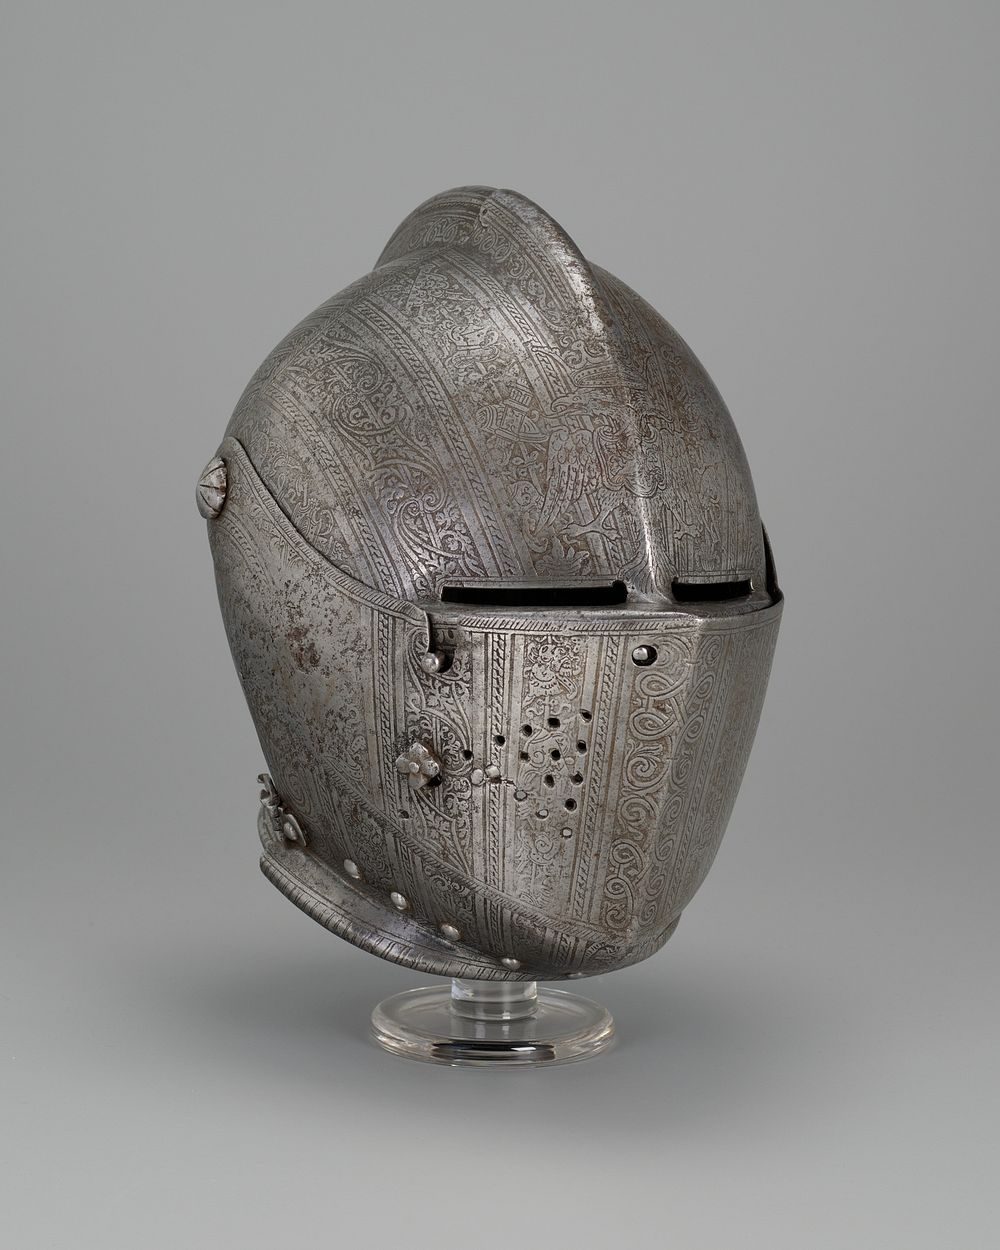 Close Helmet from an Armor of Tsar Dmitry I